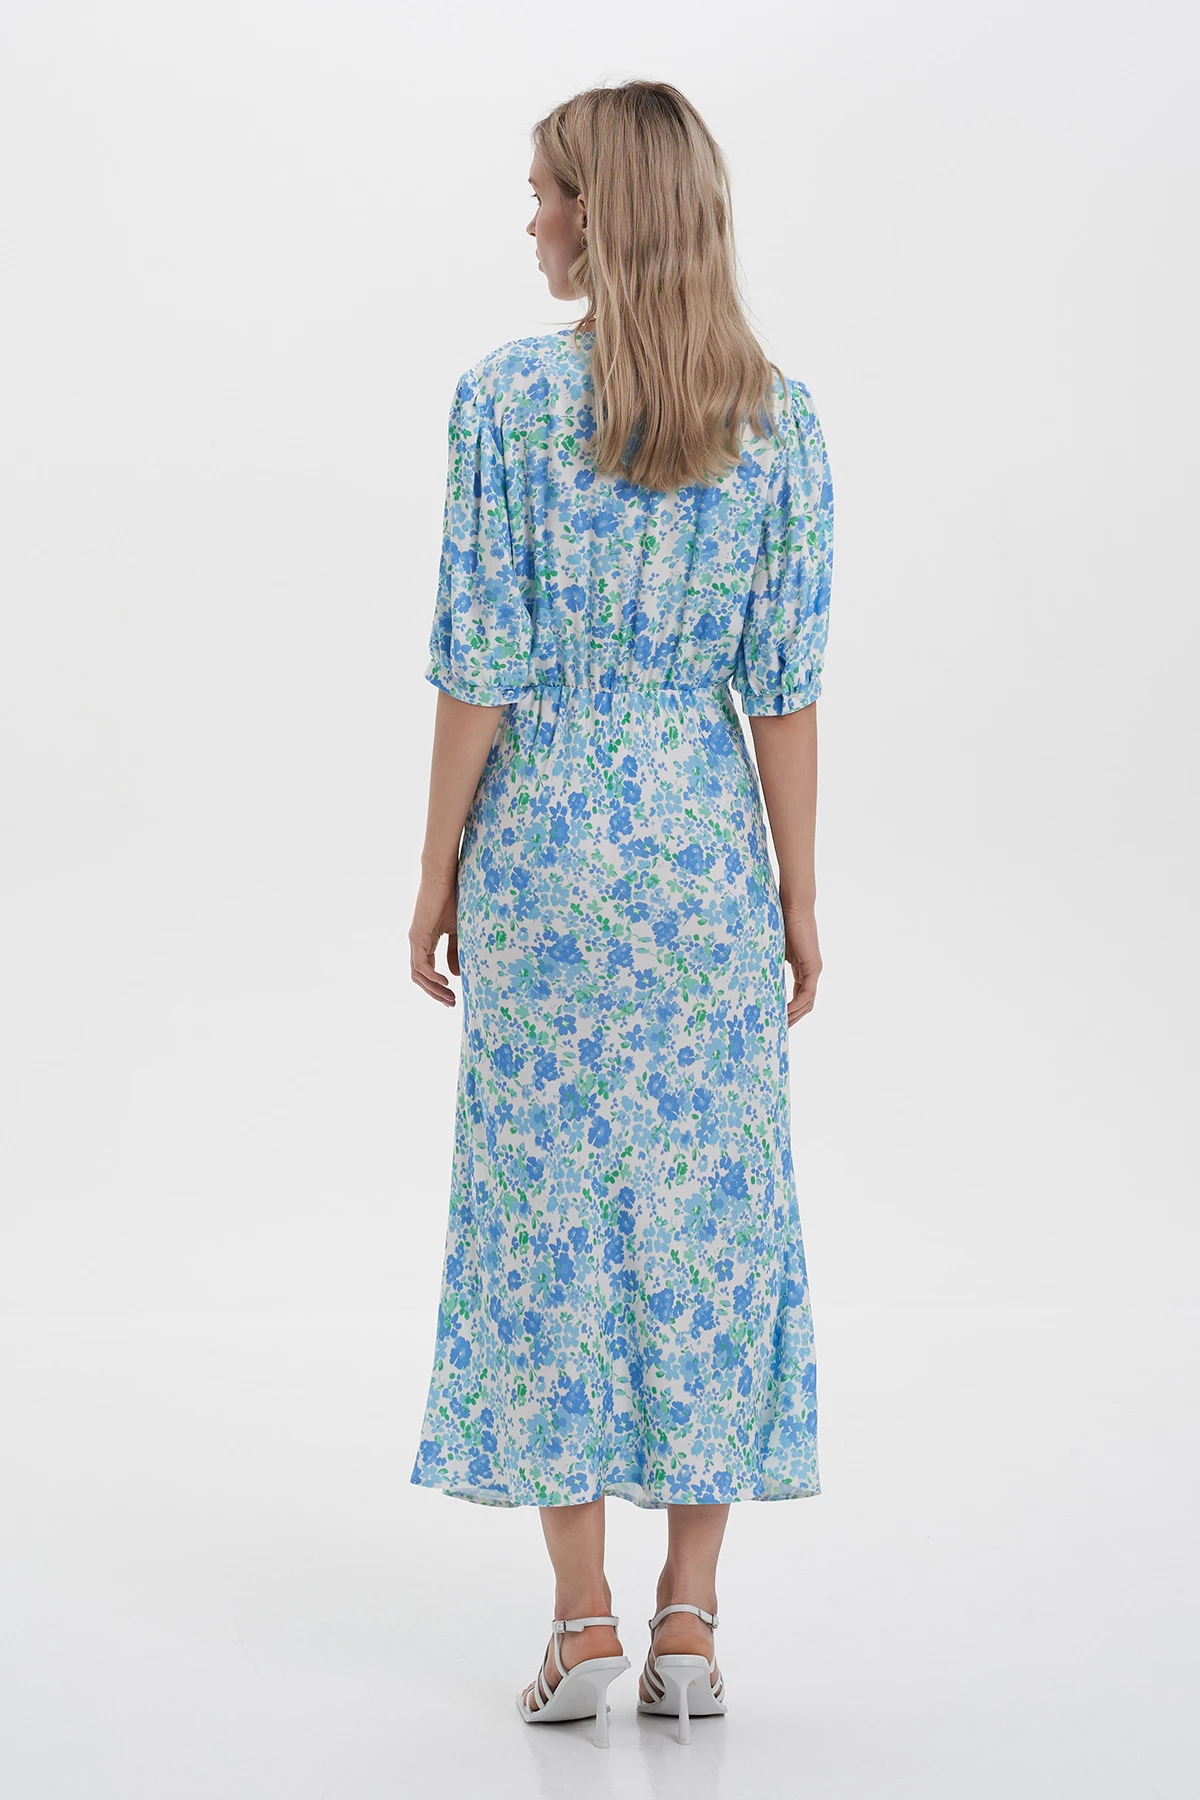 Milky short sleeve midi dress with flower print, photo 2